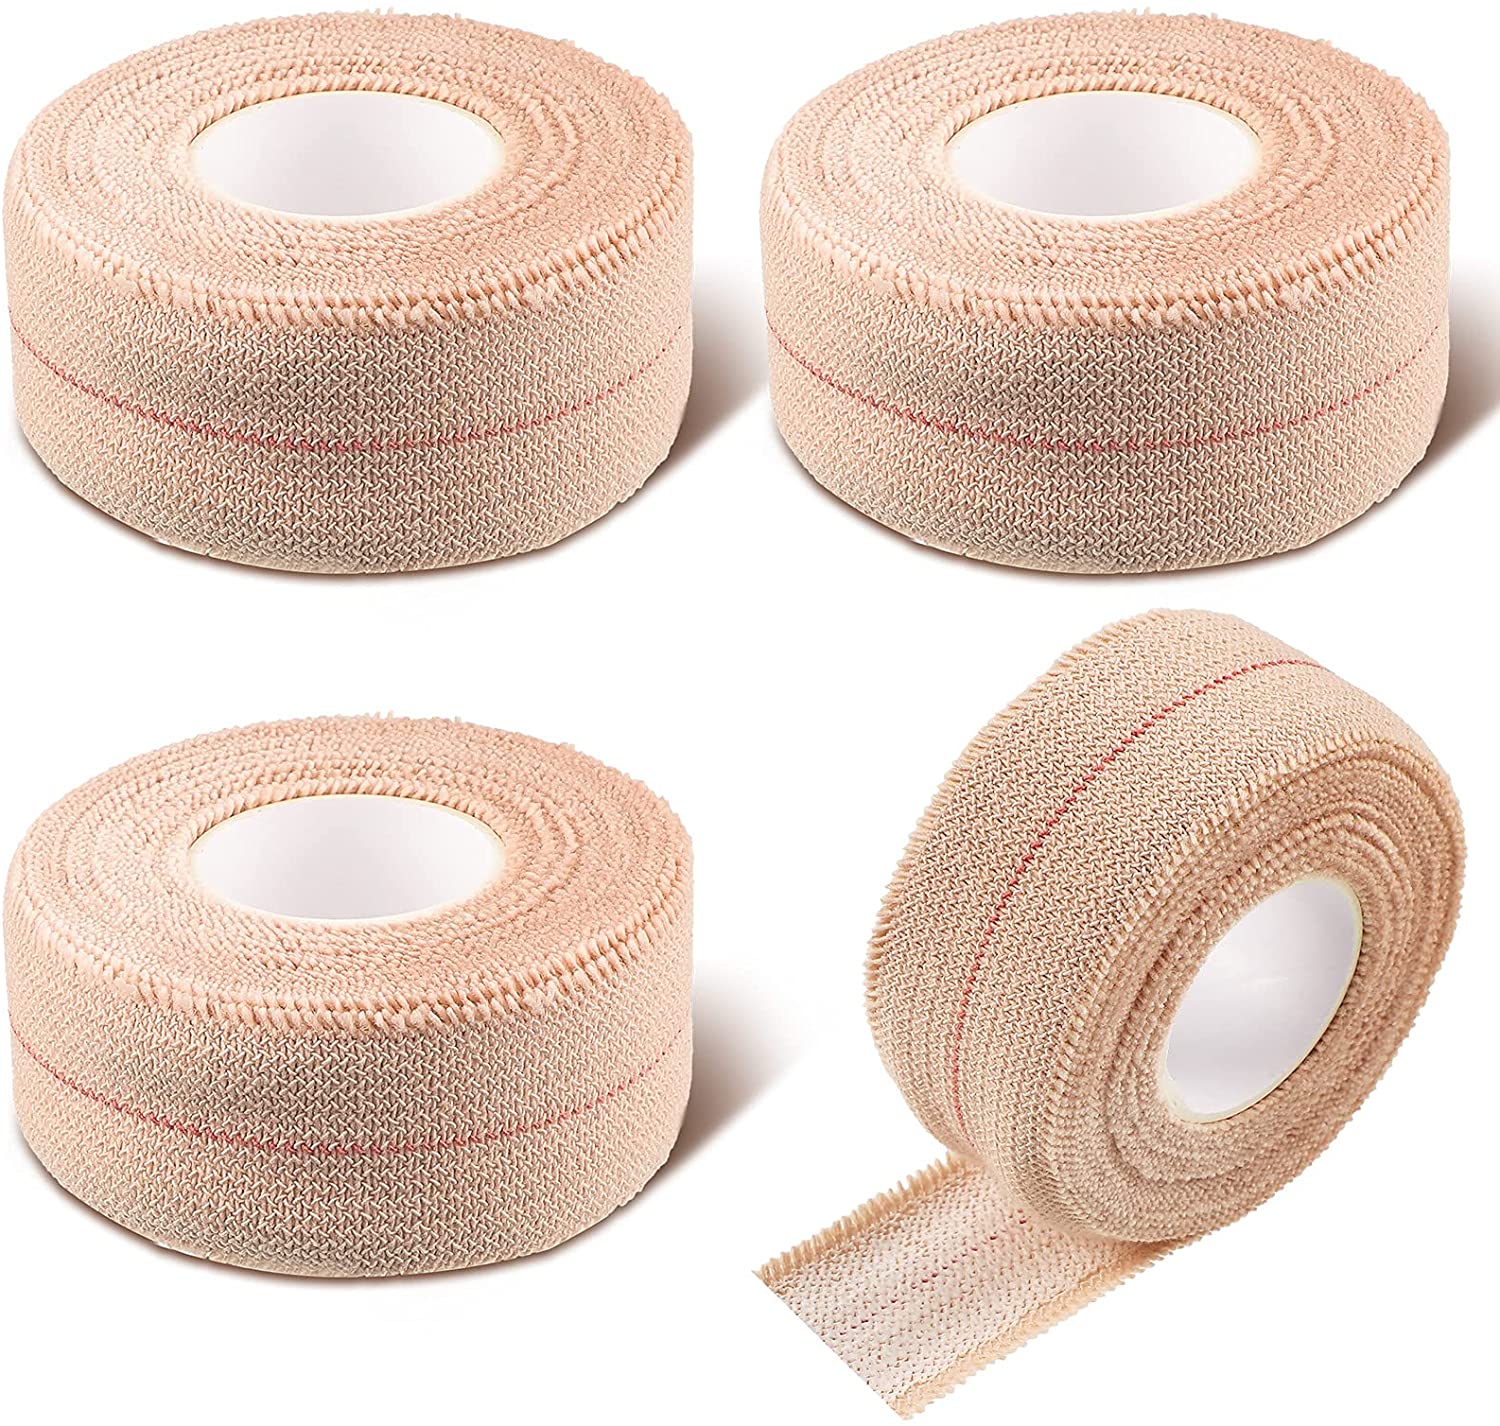 Vendajes deportivos adhesivos EAB altamente elásticos impermeables para esguinces de tobillo